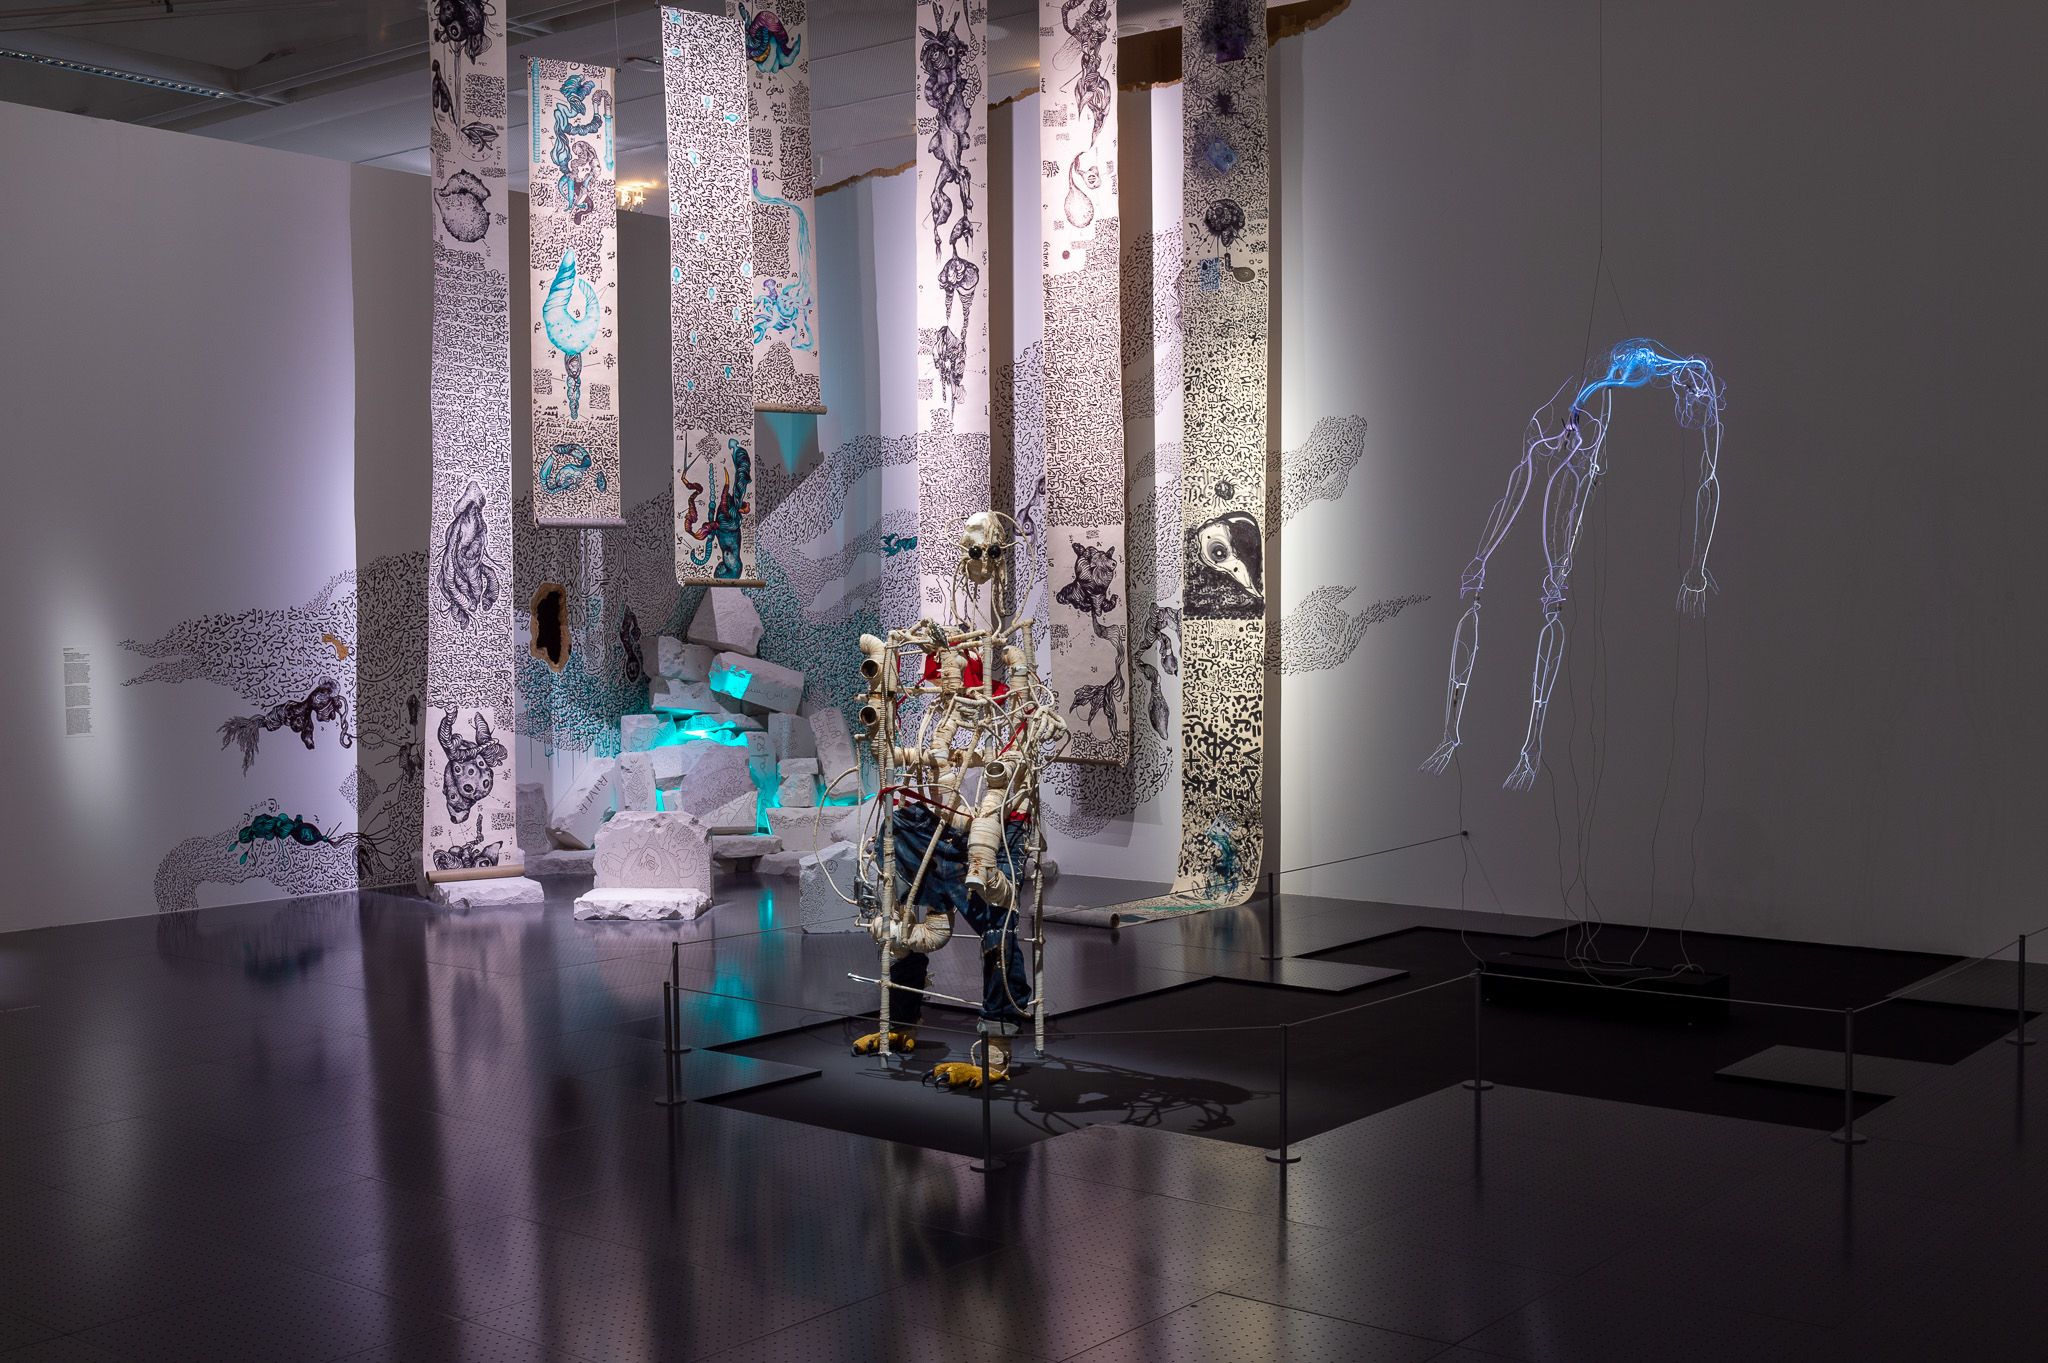 Visuel 3. Aicha Snoussi. Mediterrane an Cyborgs. 2022. In situ installation. Centre Pompidou Metz. © Centre Pompidou Metz - Photo Marc Domage